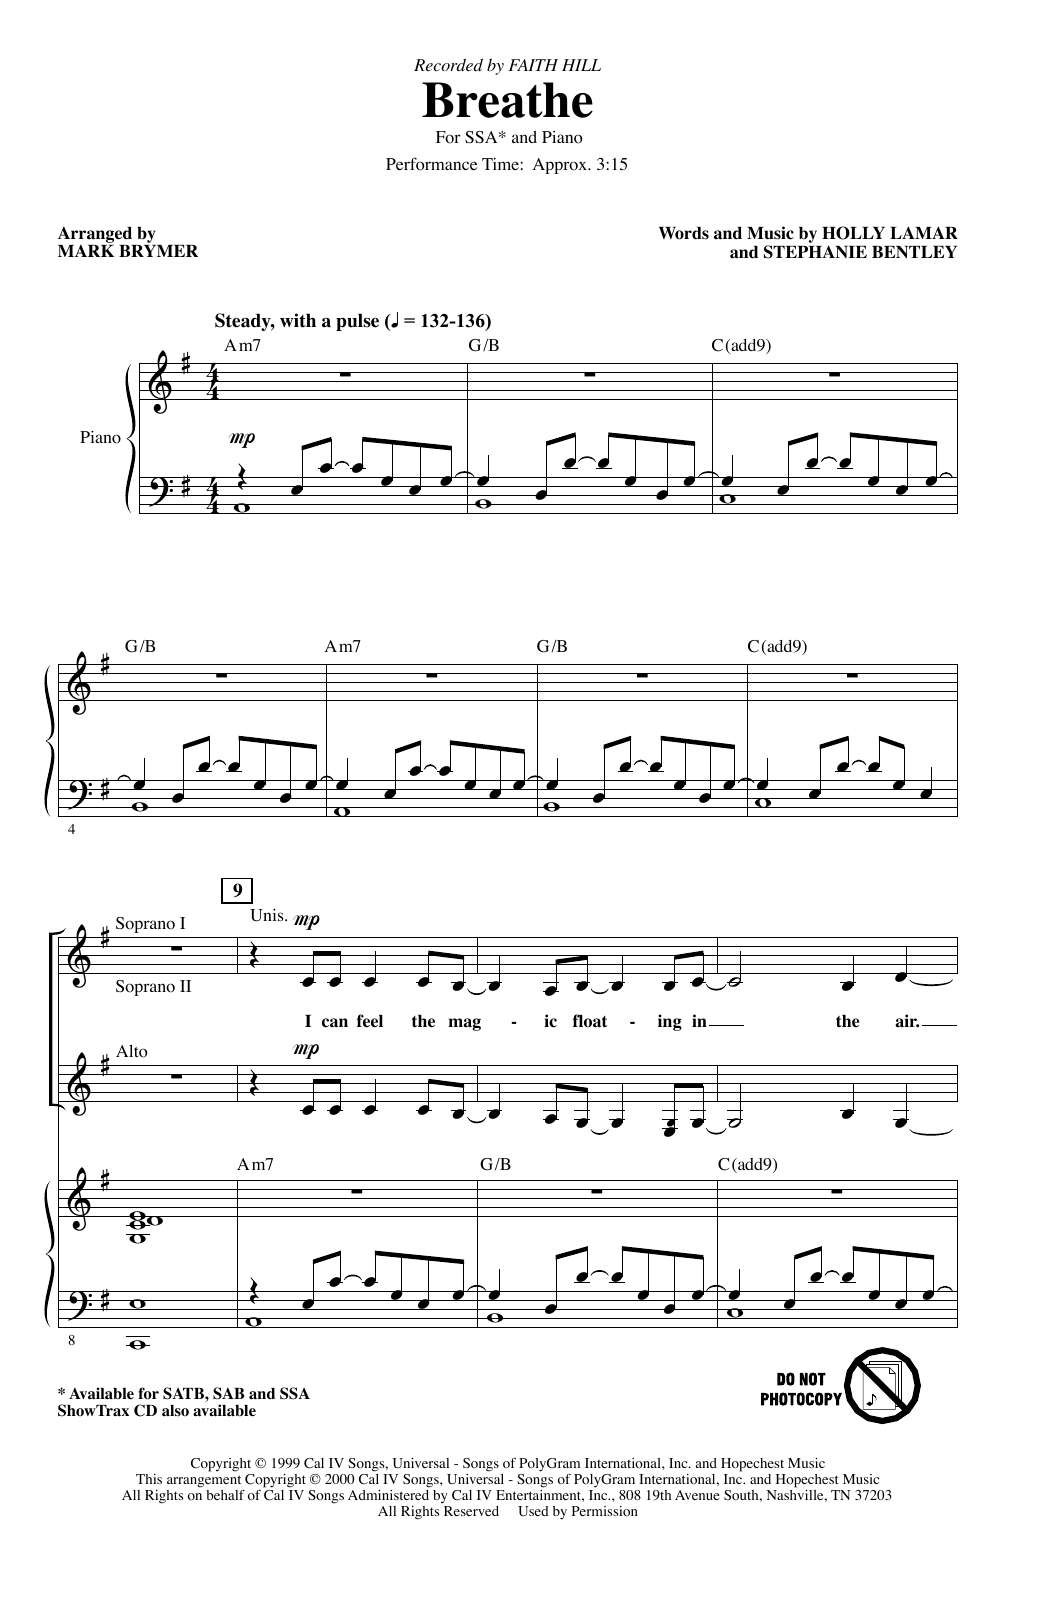 Faith Hill Breathe (arr. Mark Brymer) Sheet Music Notes & Chords for SSA Choir - Download or Print PDF